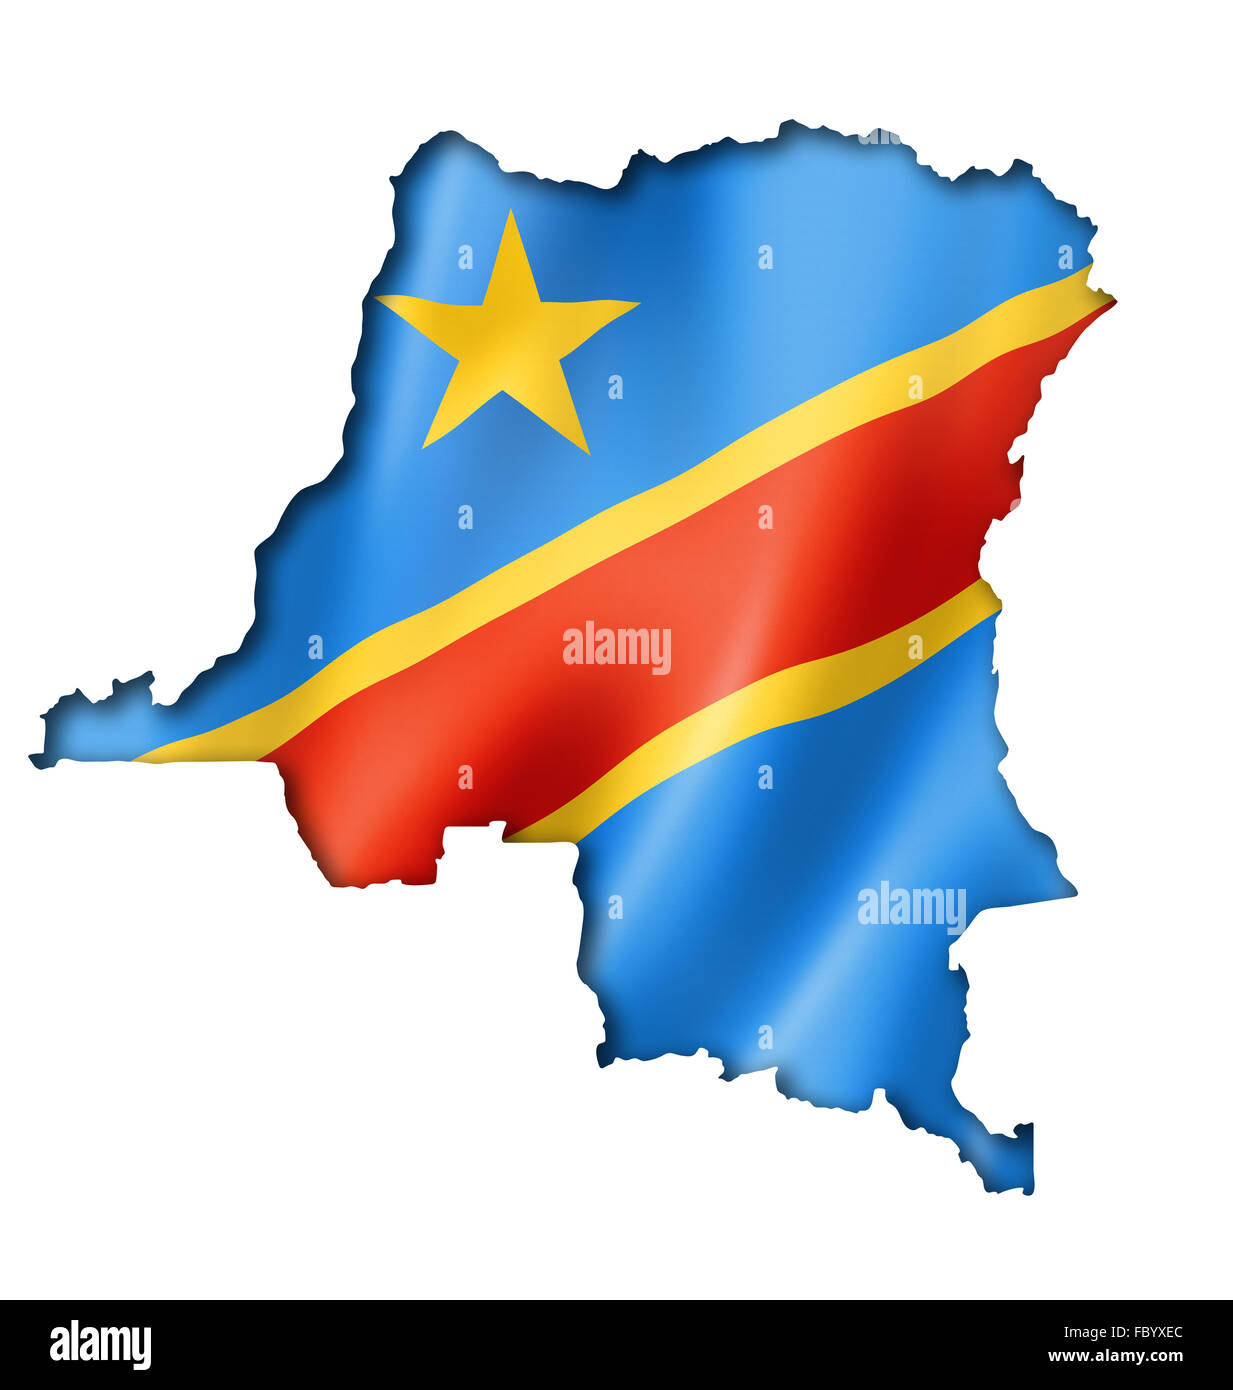 Democratic Republic of the Congo flag map Stock Photo